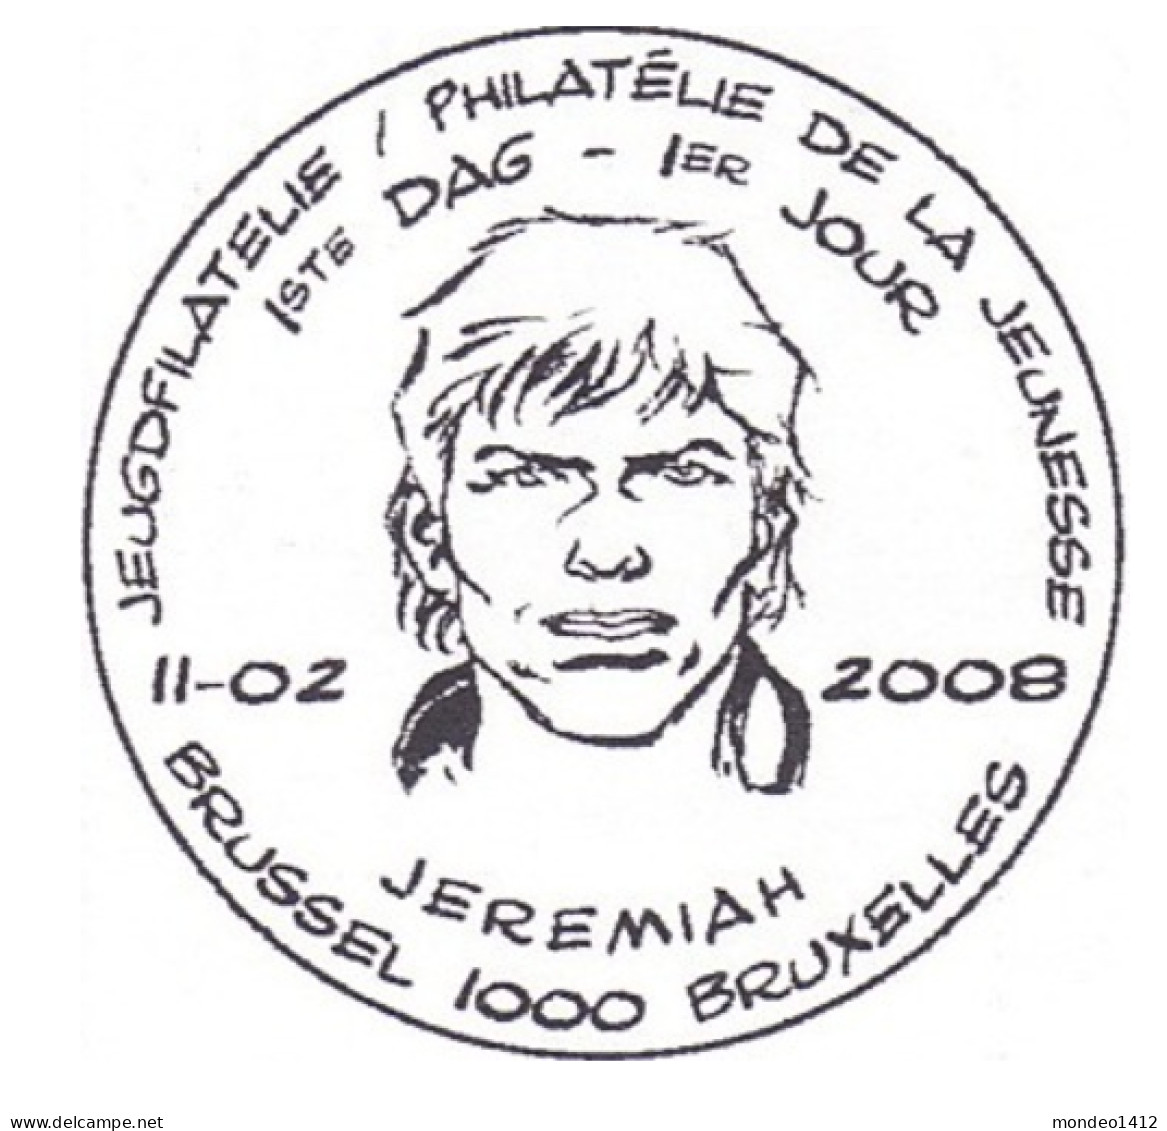 België OBP 3752 - Comics - Strips - BD - Jeremiah - Oblitérés